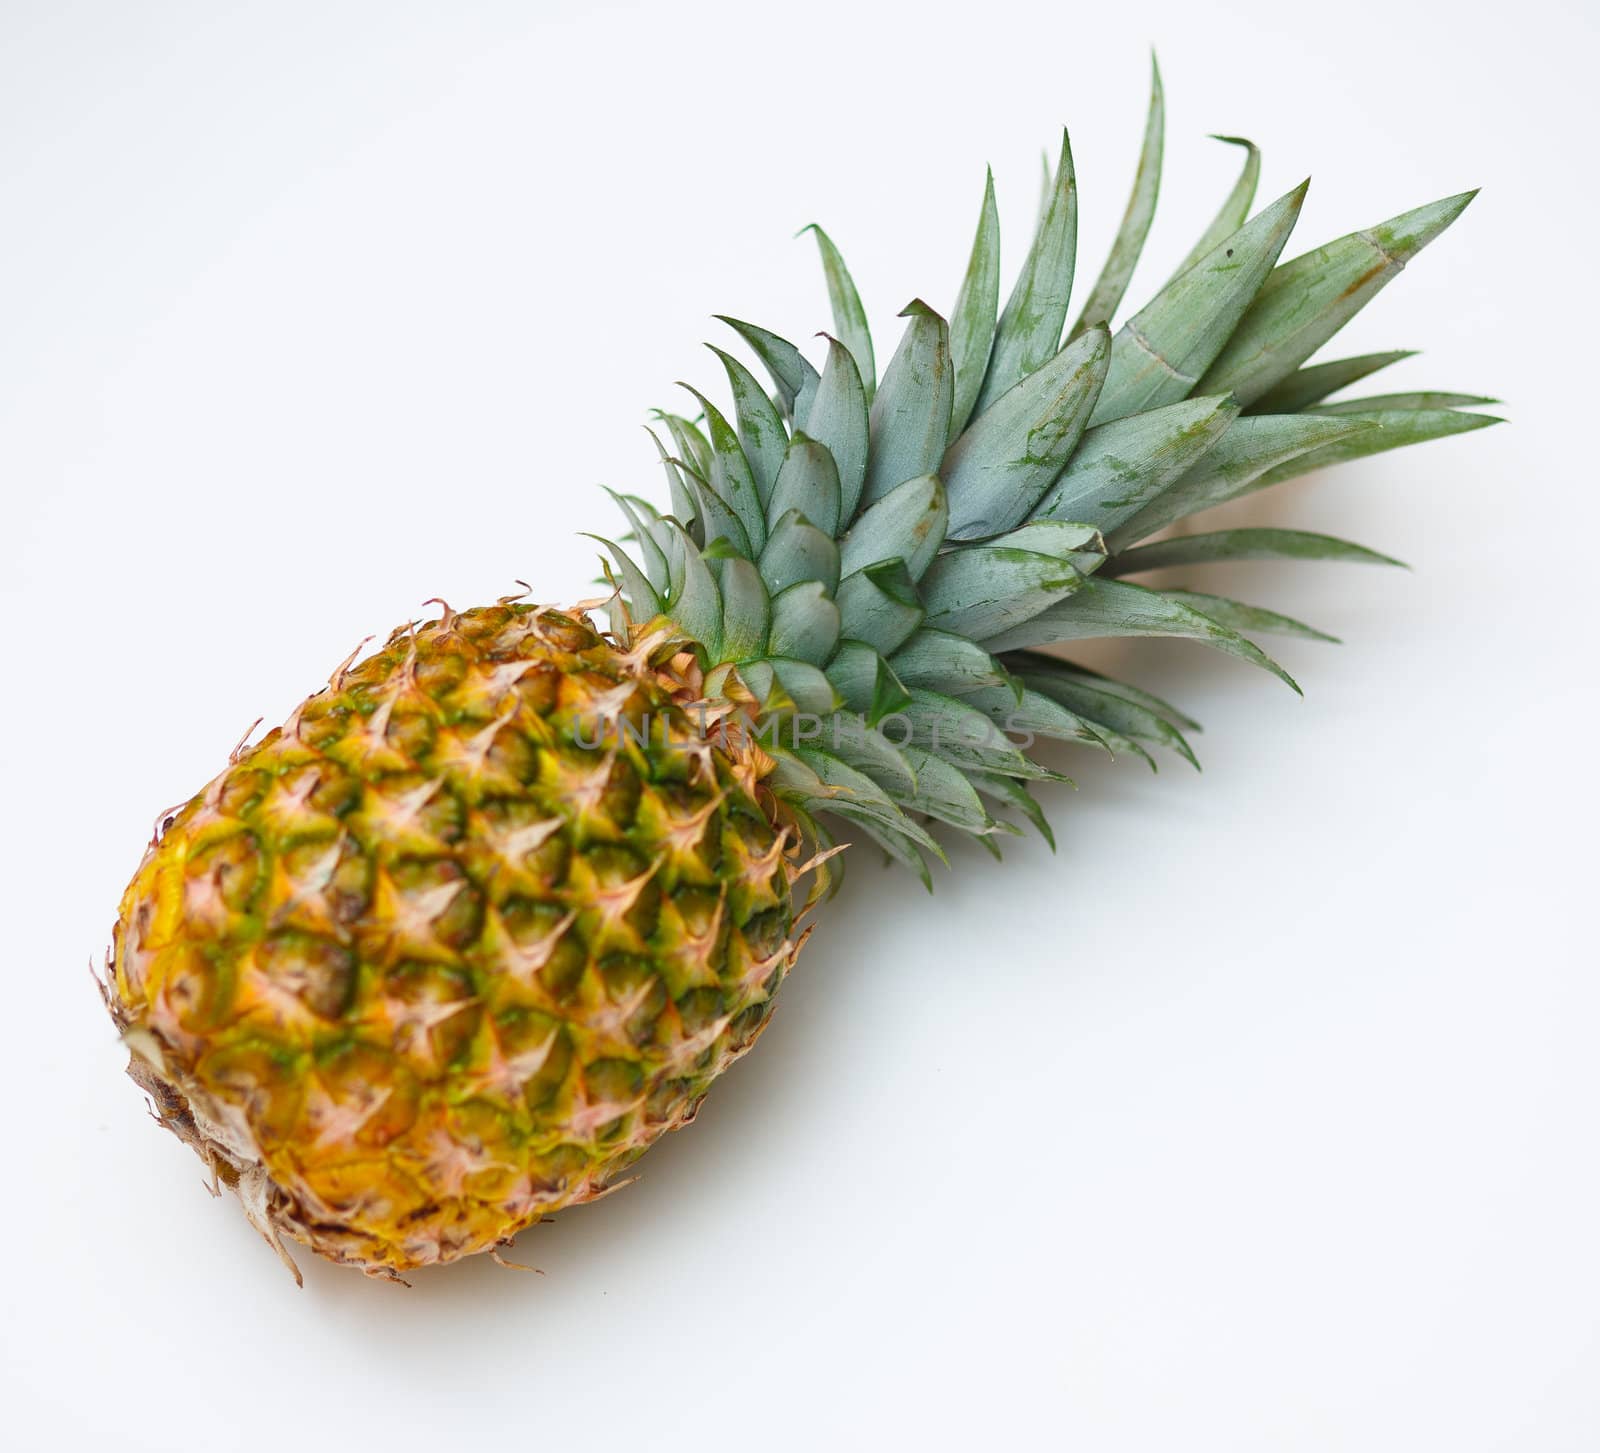 fresh pineapple isolated on white background